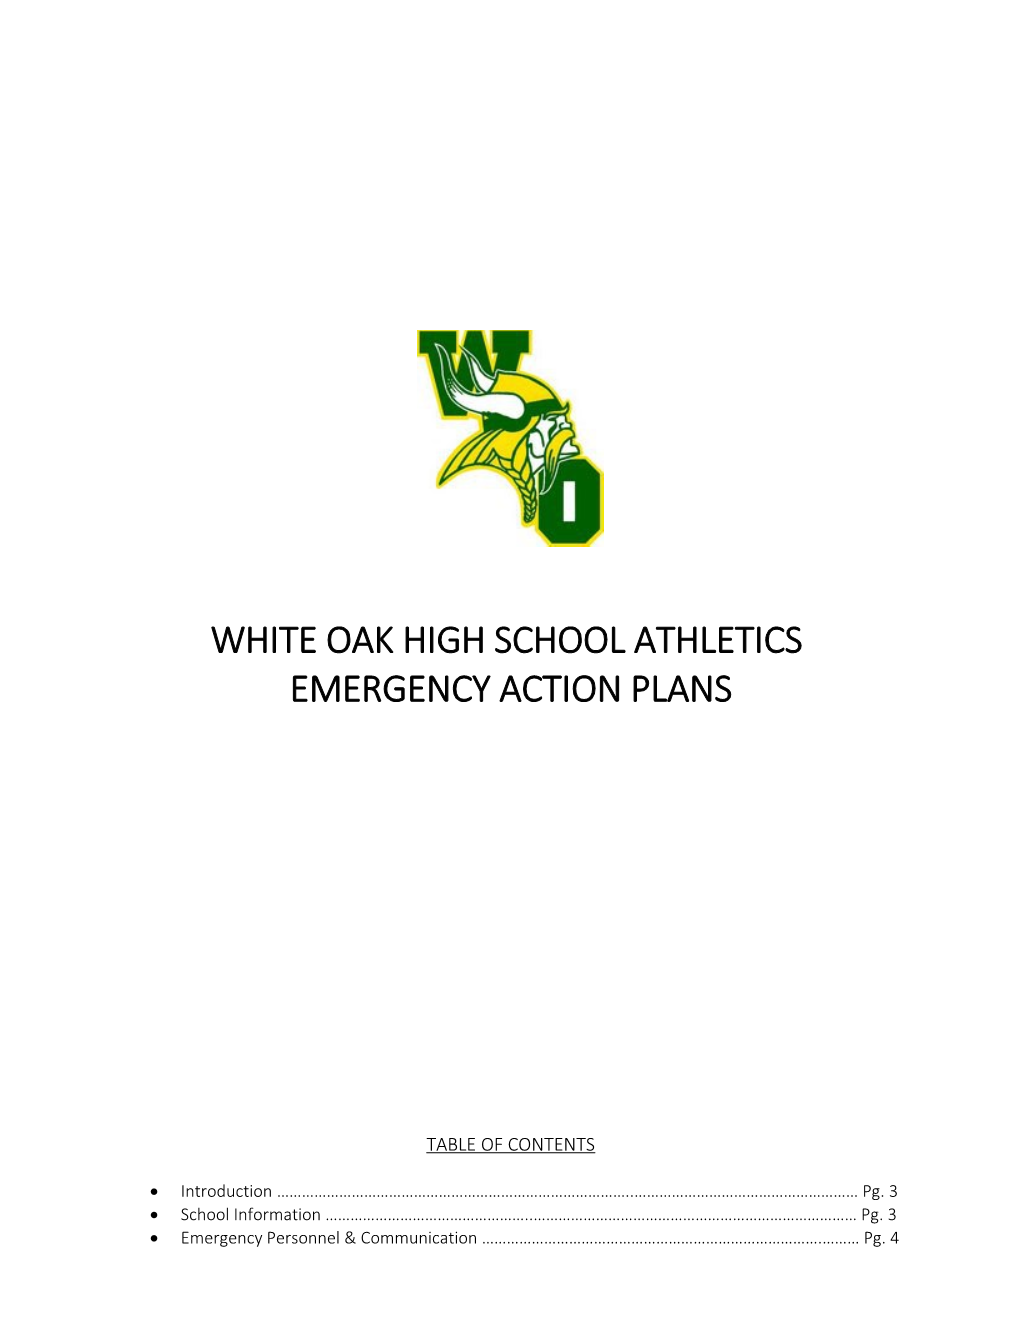 White Oak High School Athletics